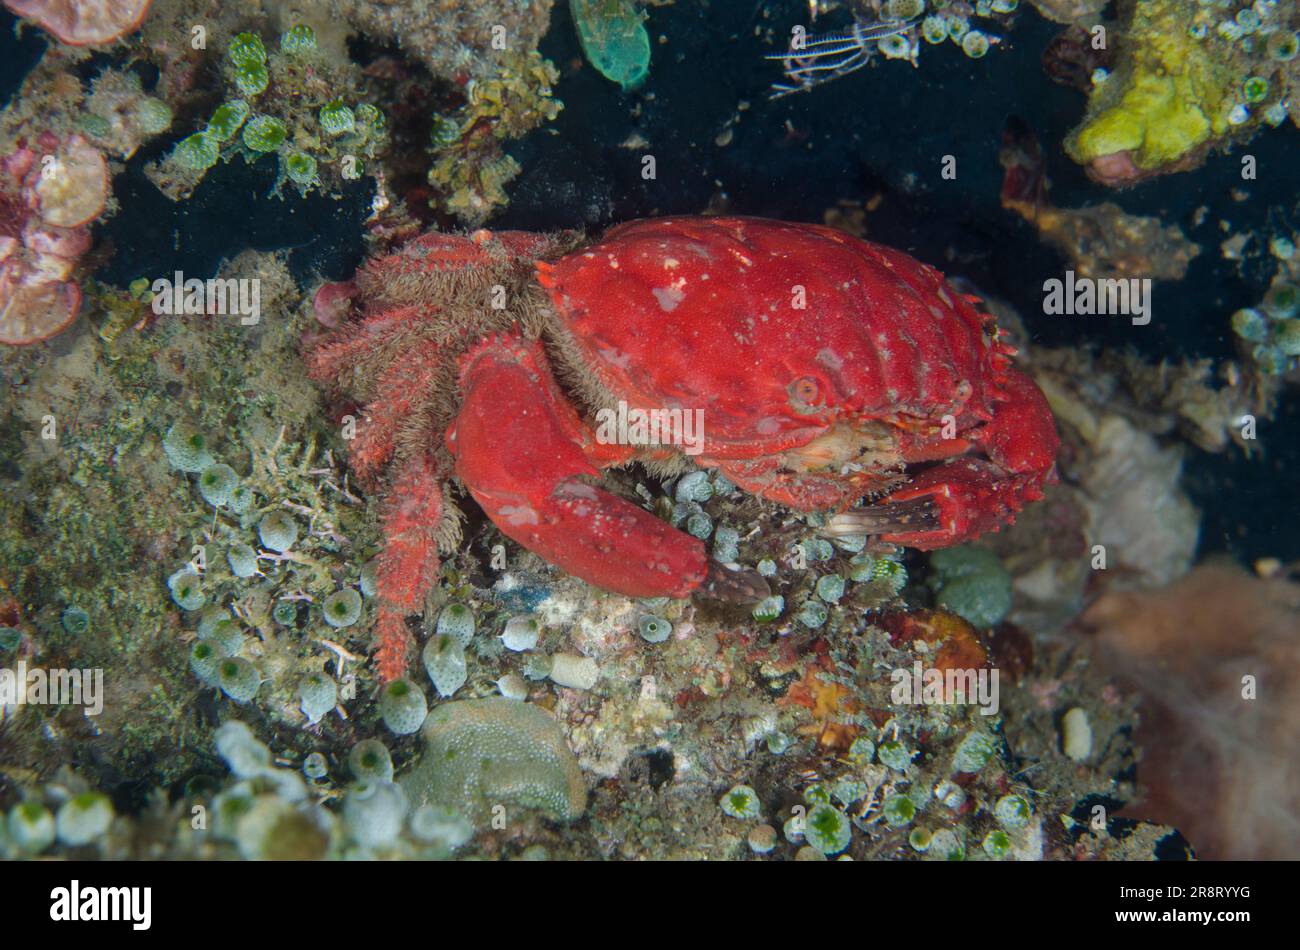 Hairy Spooner Crab, Etisus anaglyptus, night dive, Pyramids dive site, Amed, Karangasem Regency, Bali, Indonesia, Indian Ocean Stock Photo